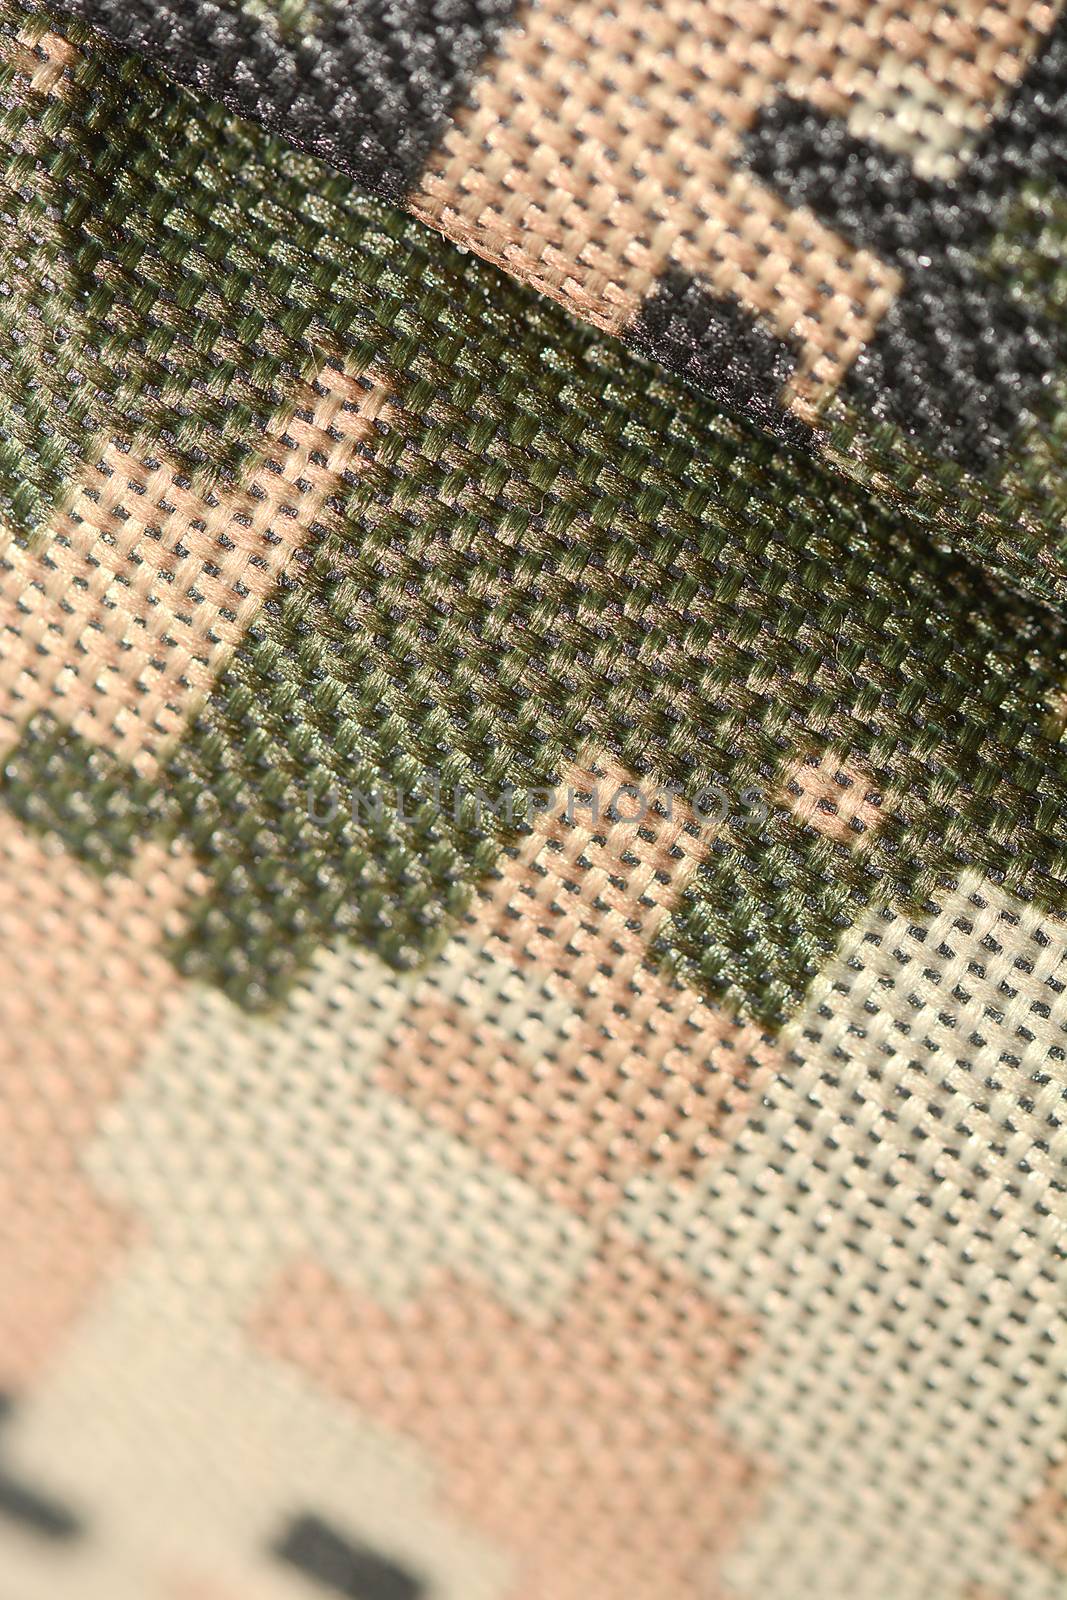 Close up of military uniform fabric.